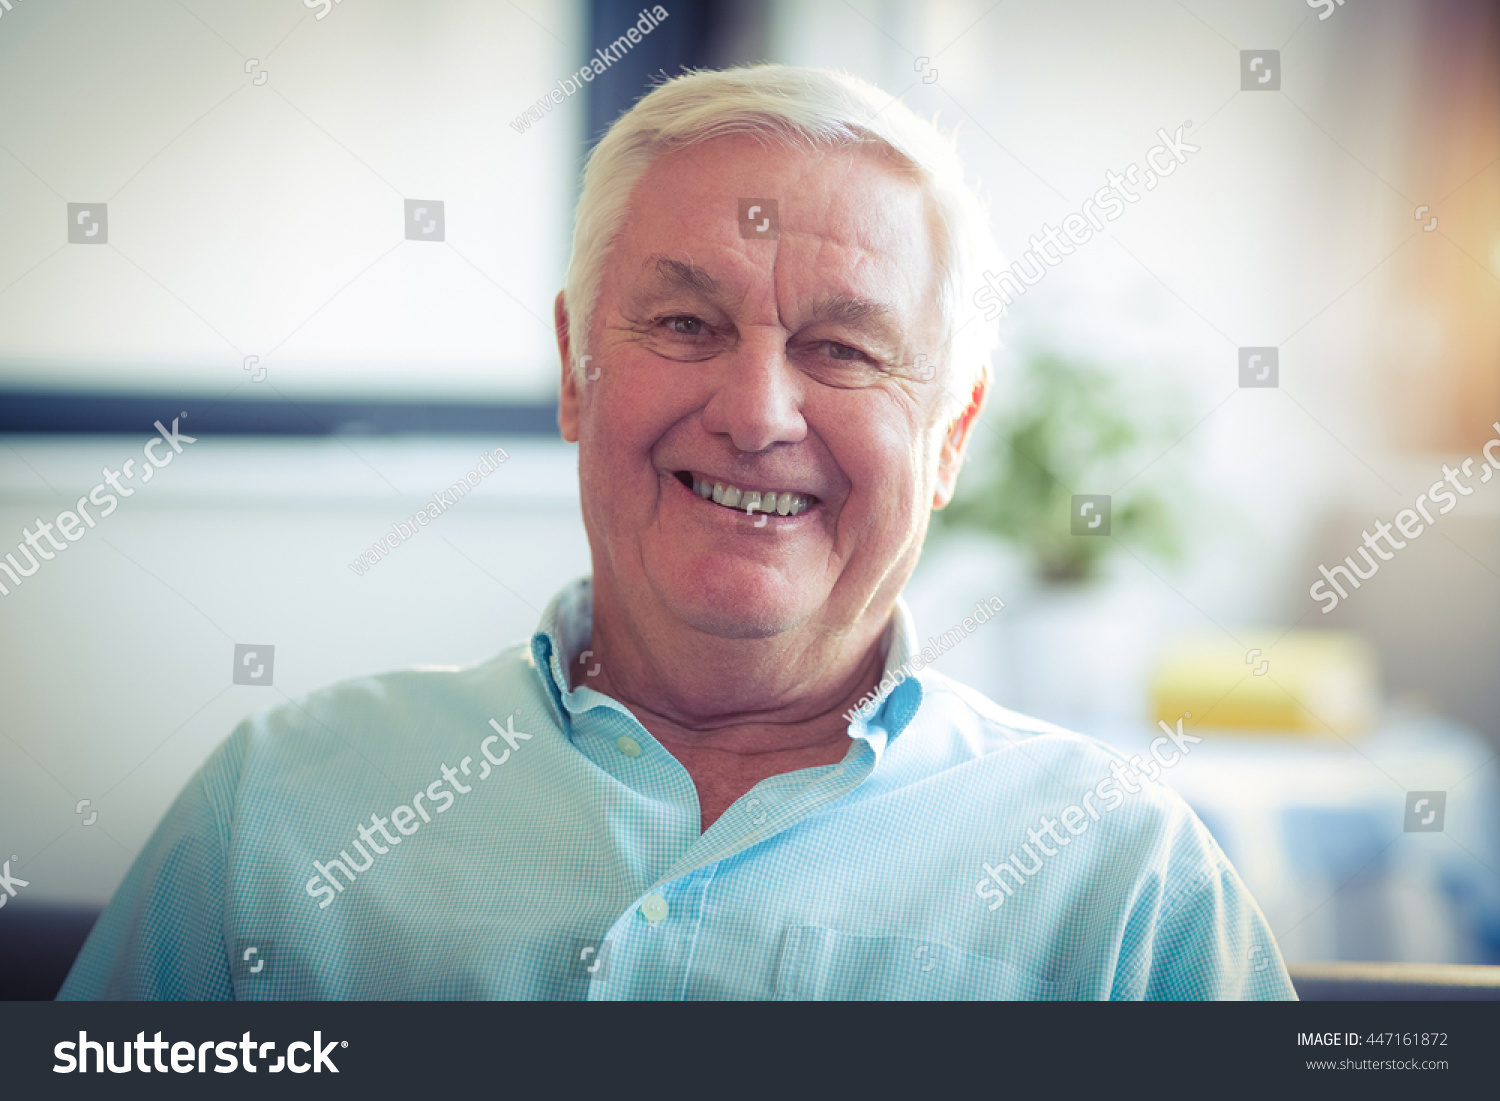 Portrait of happy senior man at home #447161872